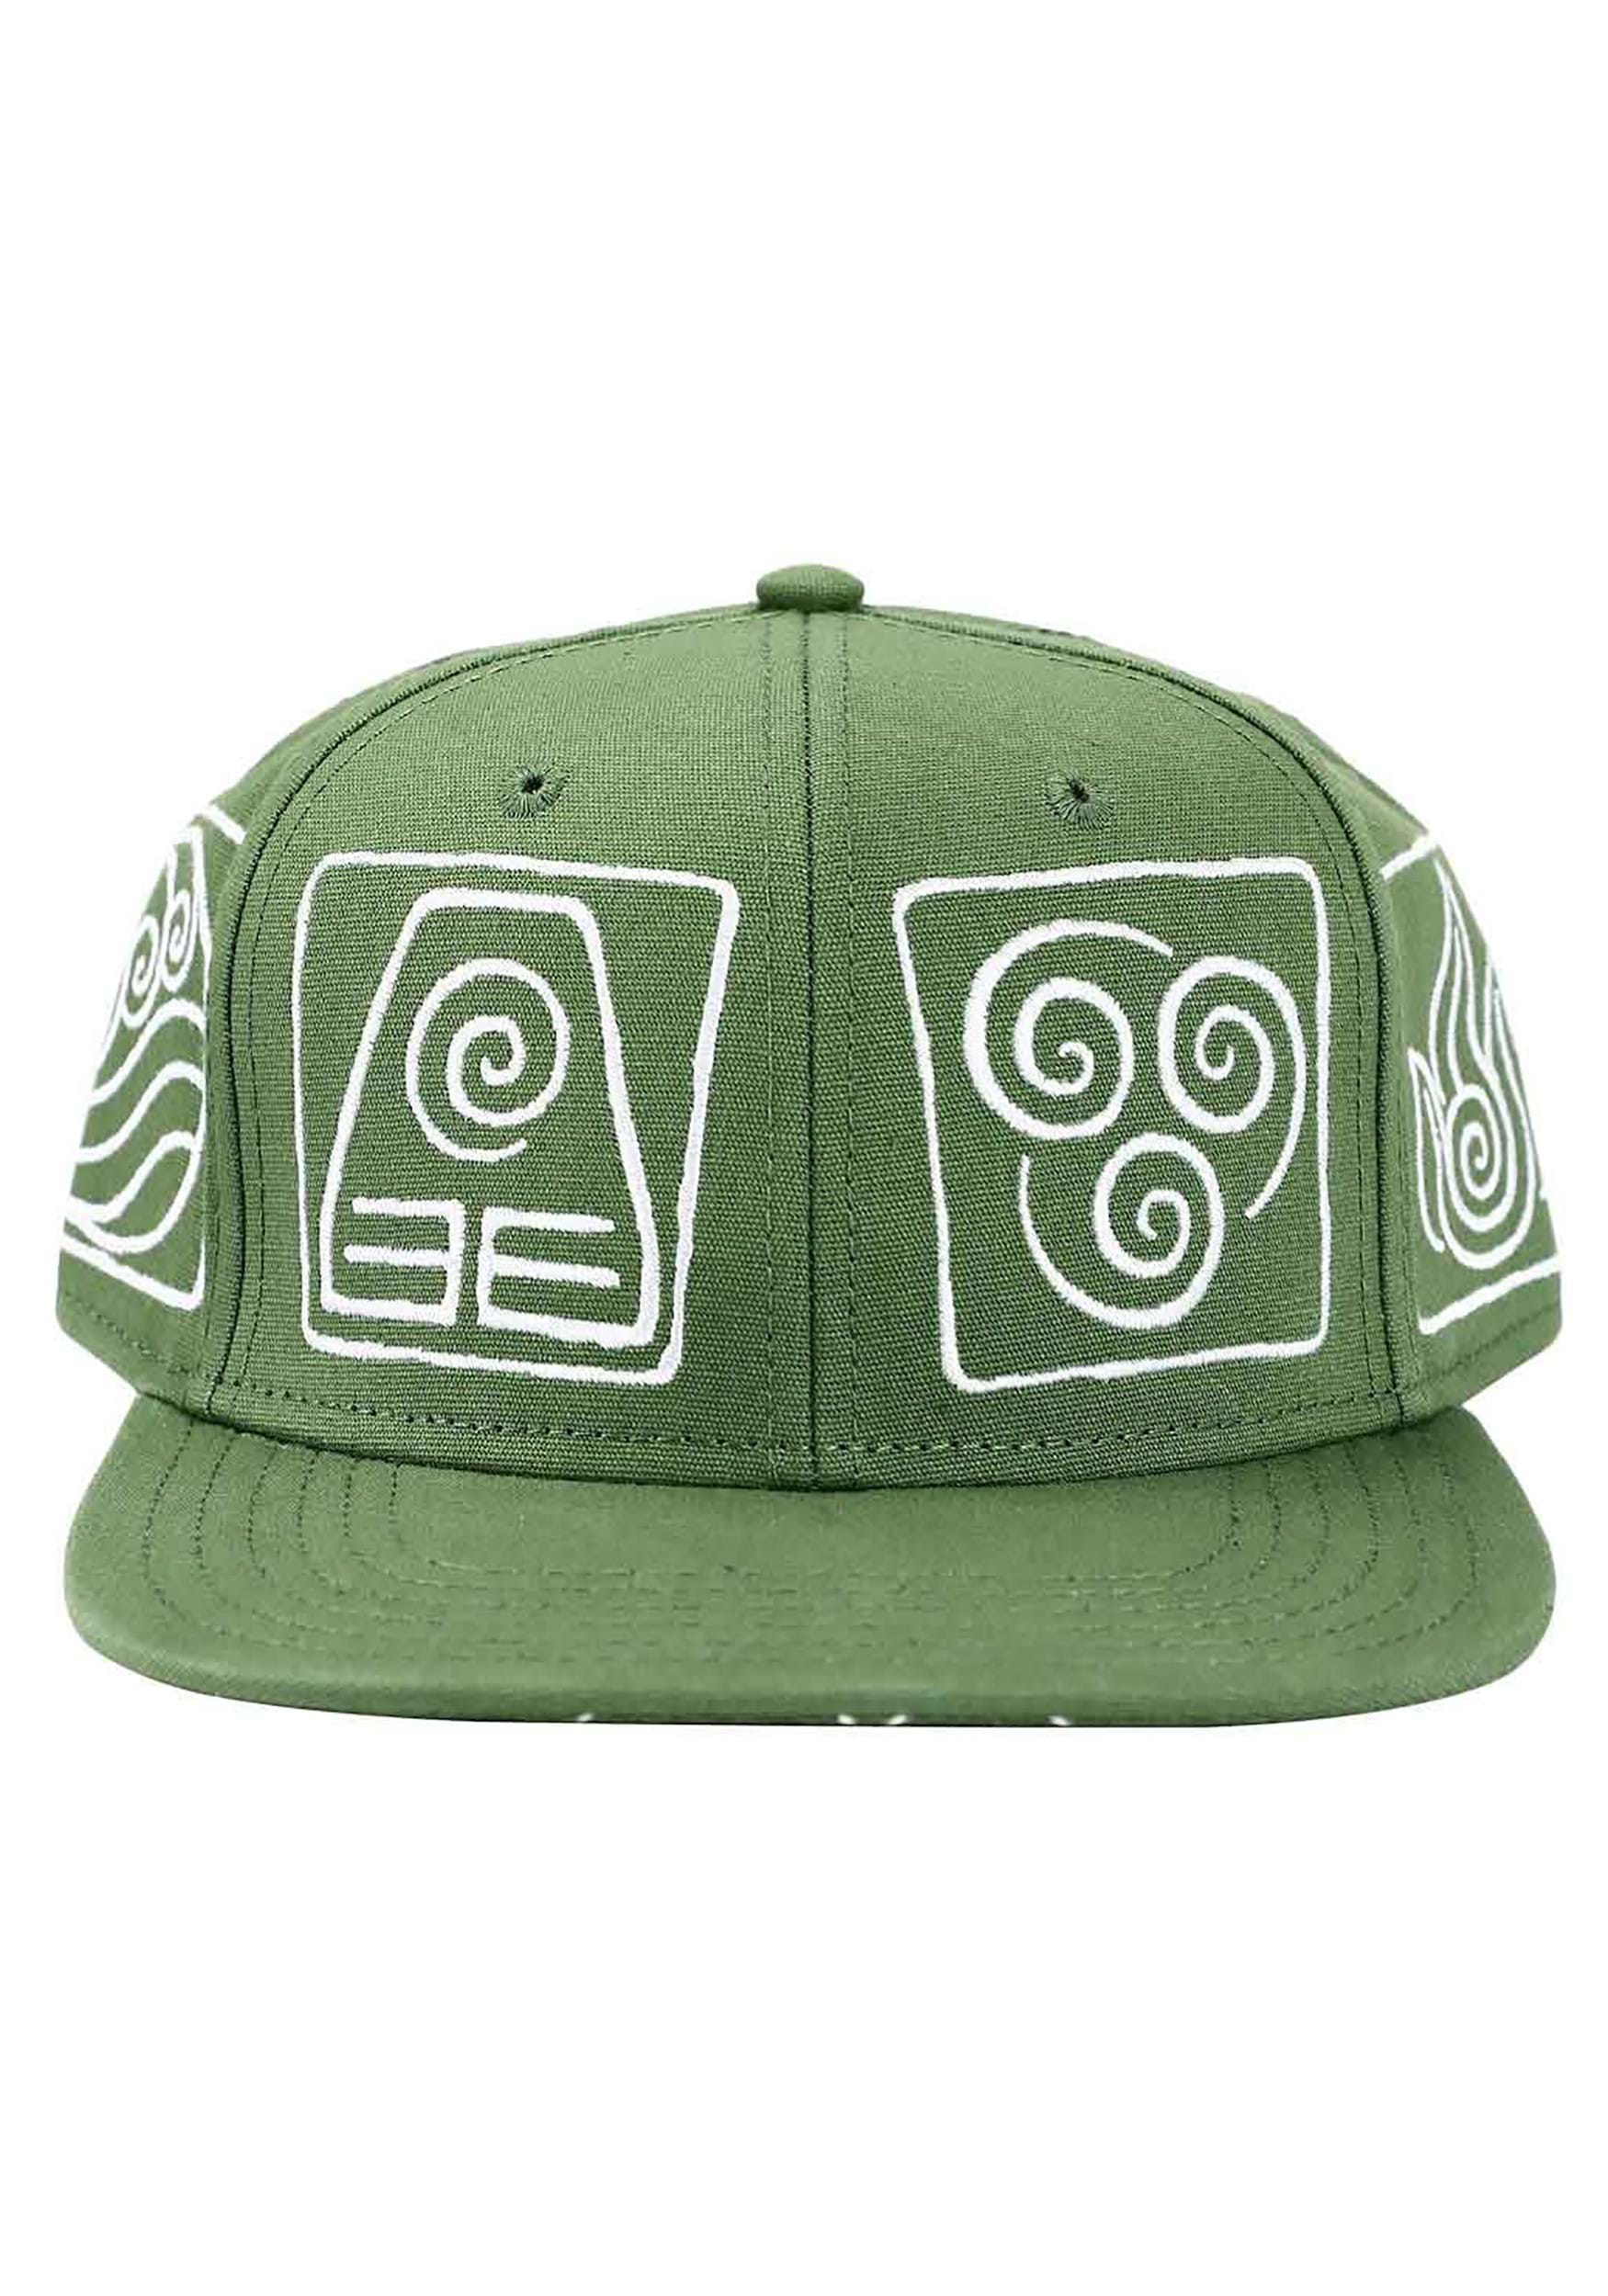 Elemental Symbols Avatar The Last Airbender Flat Bill Snapback Hat